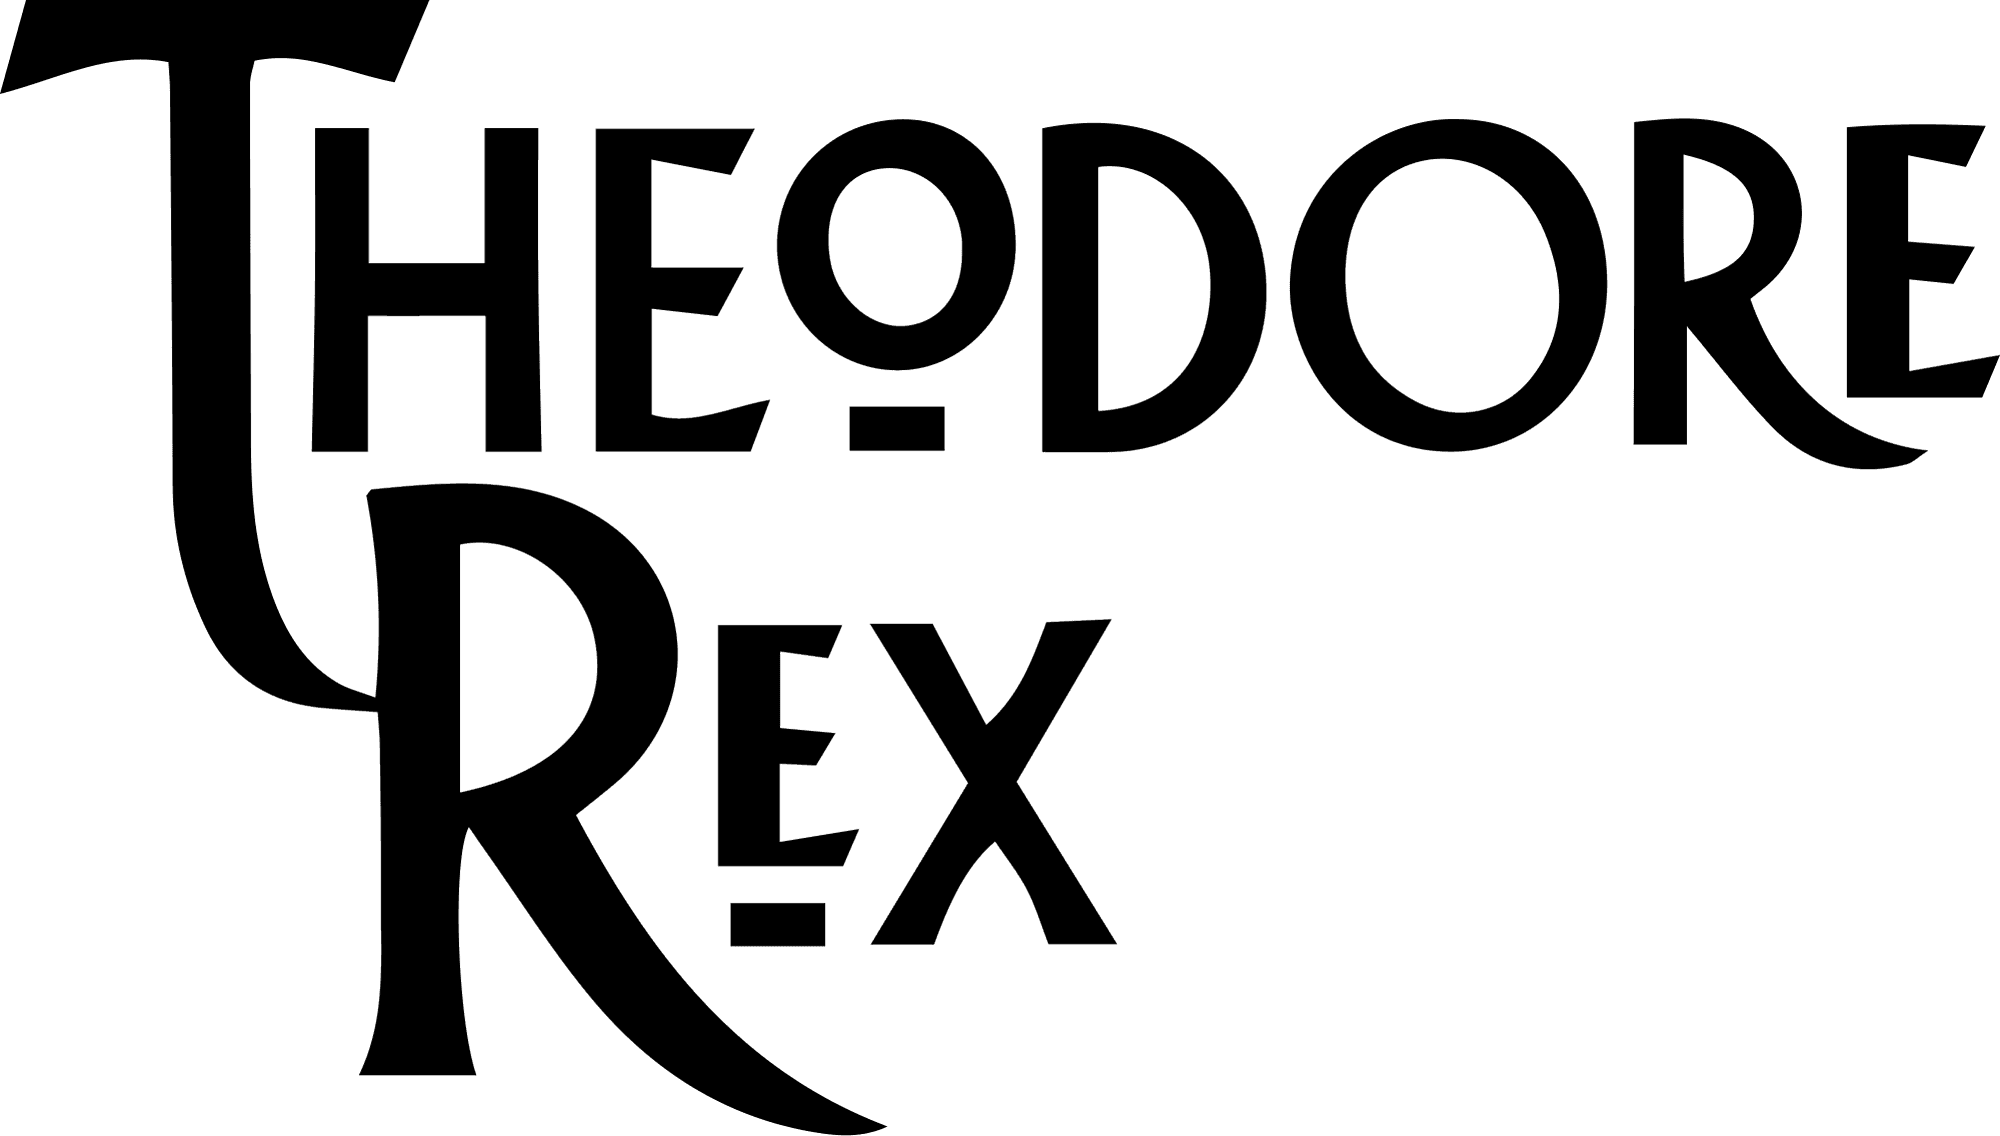 Theodore Rex logo